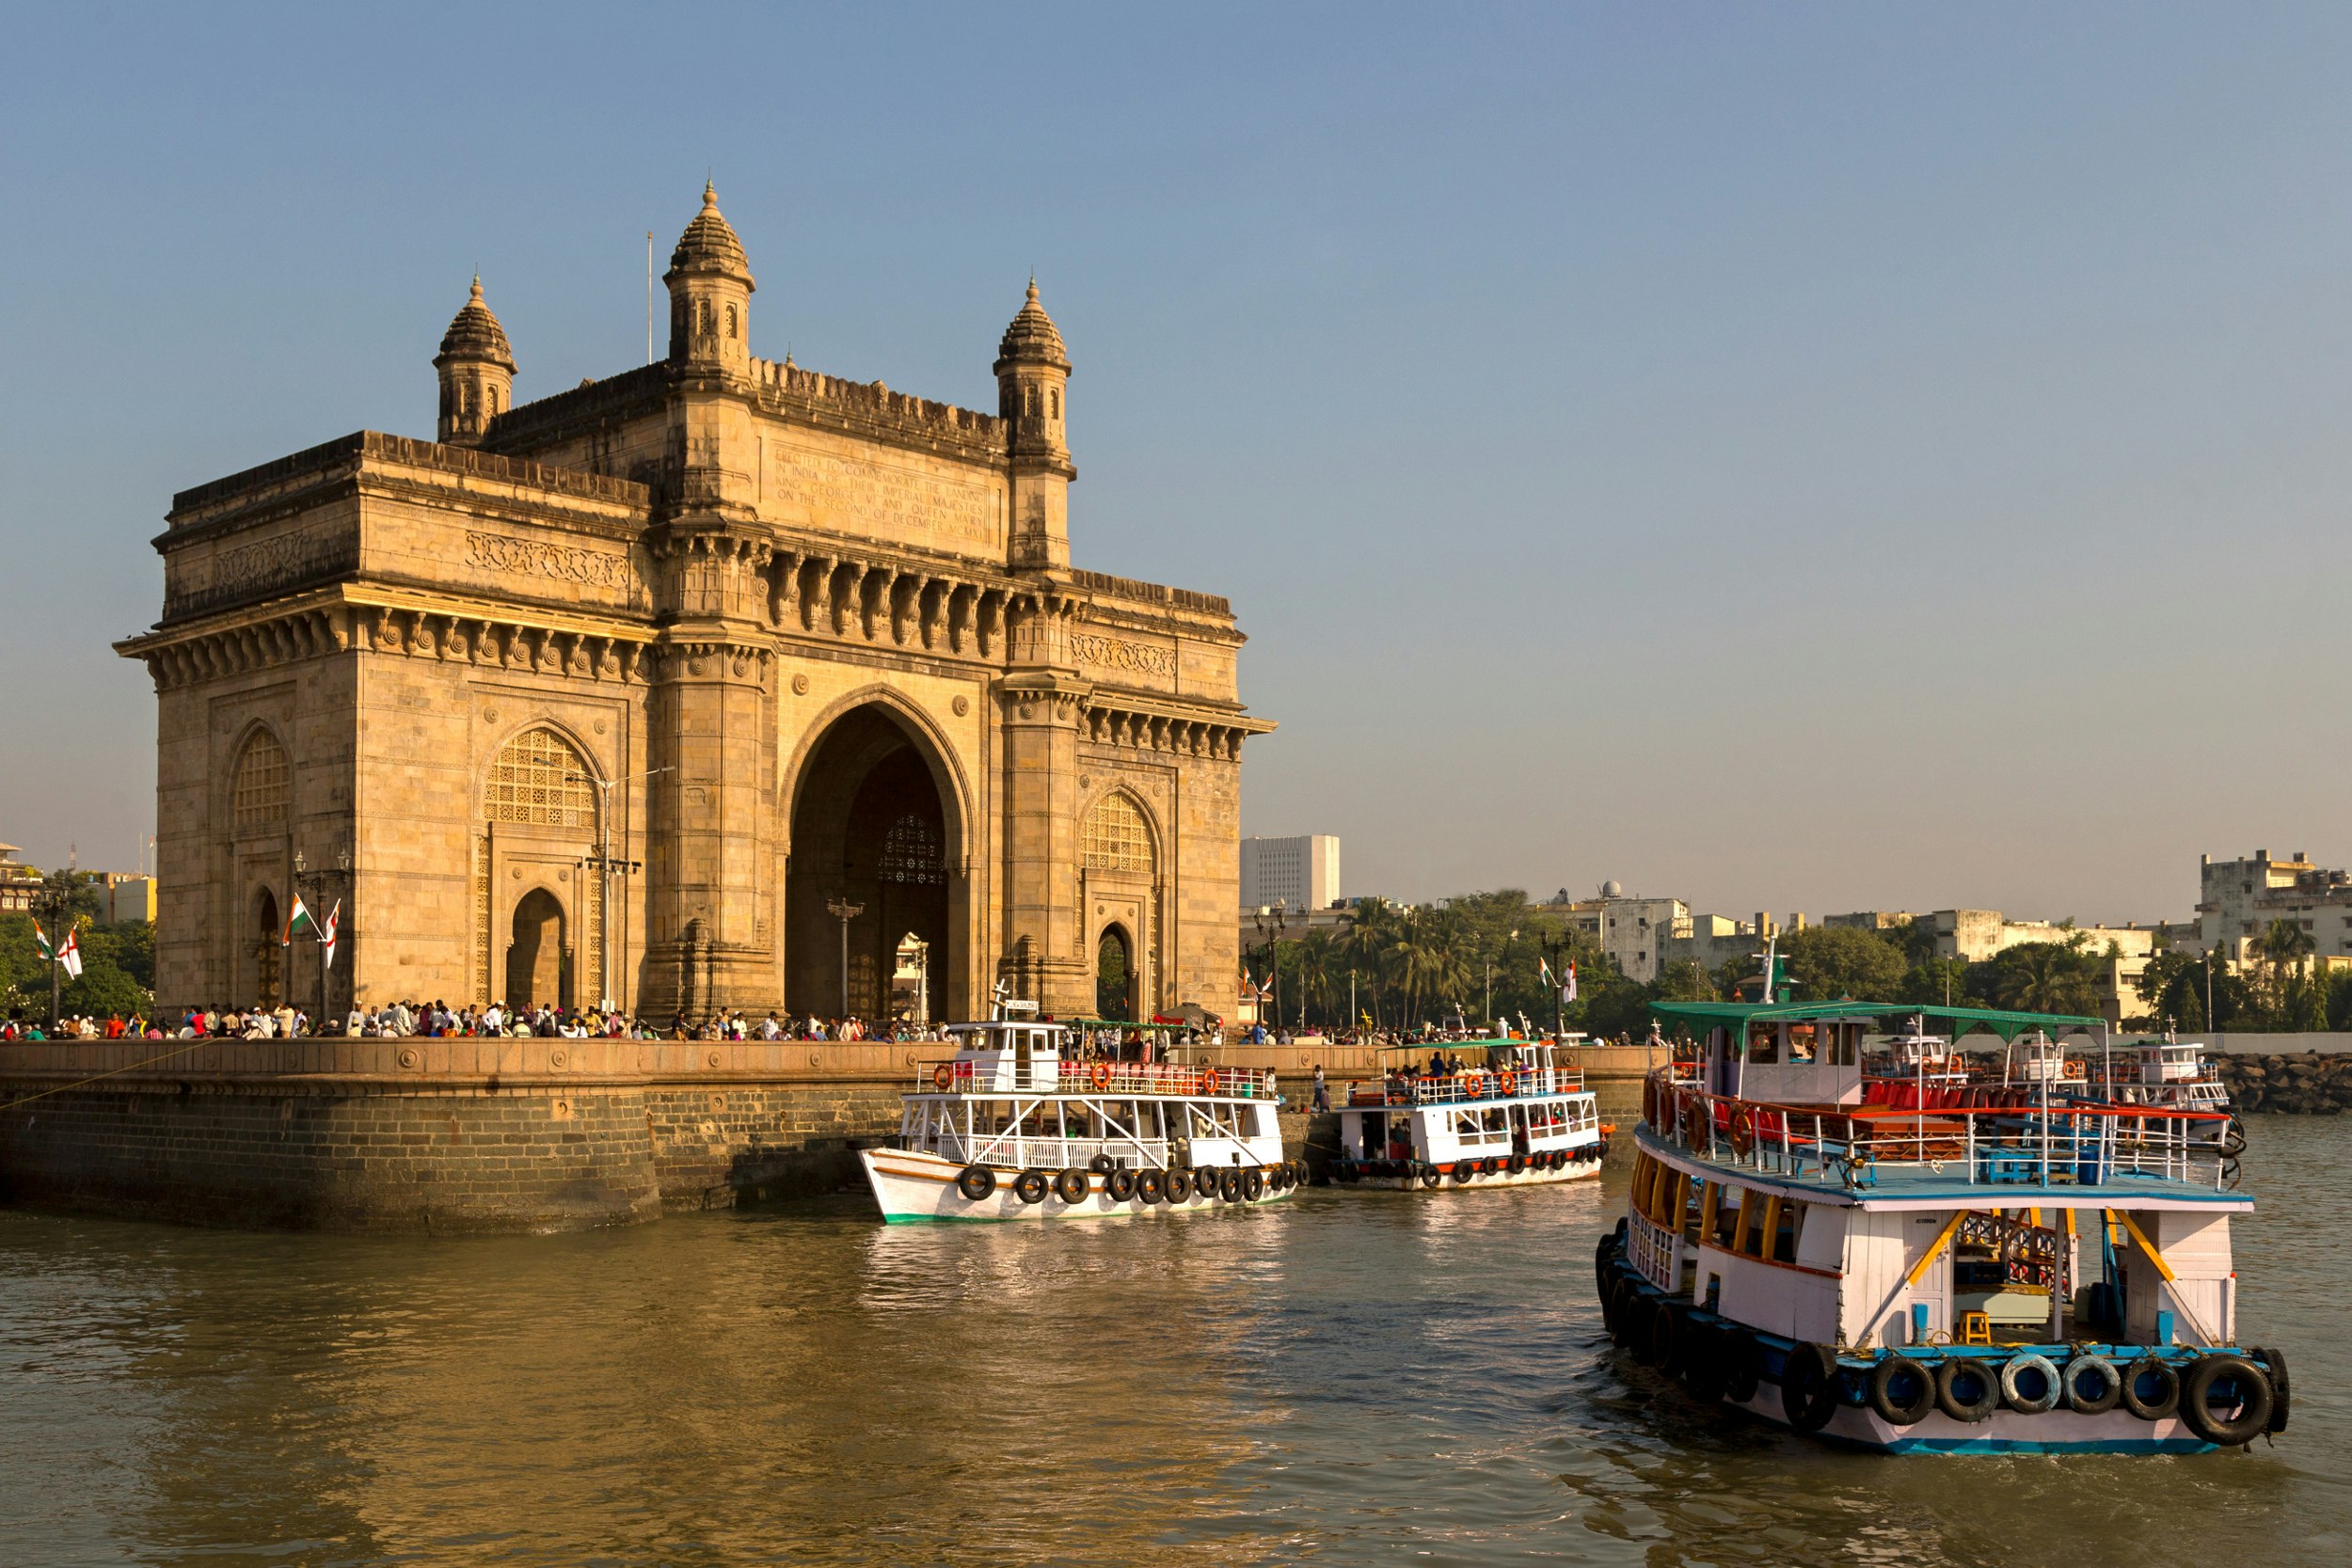 Mumbai (Bombay) travel - Lonely Planet